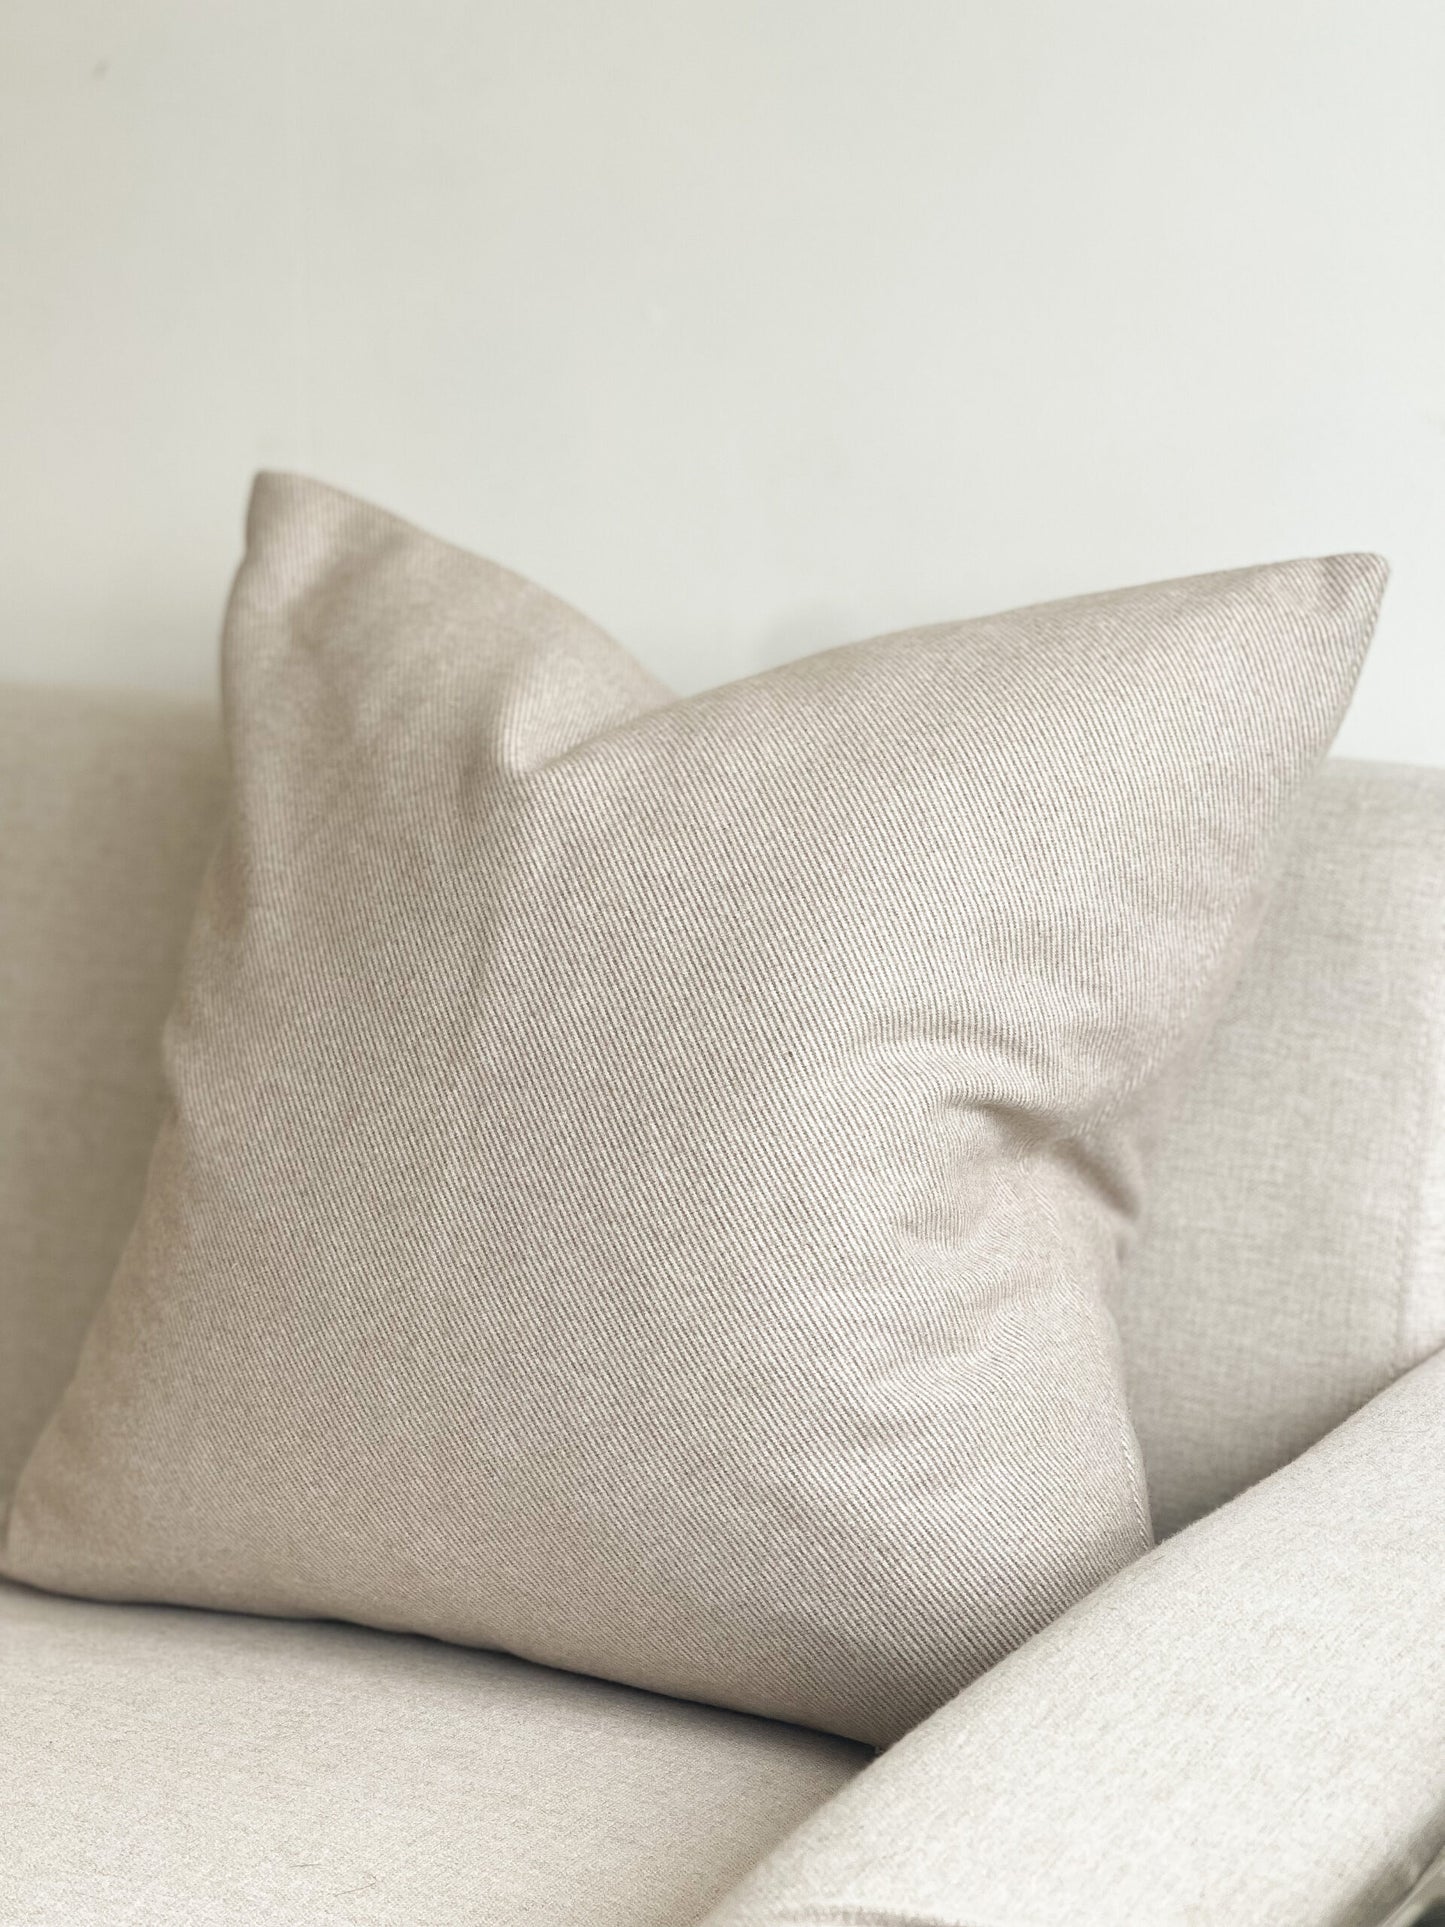 Wool Effect Cushion Cover in Beige (45x45cm)